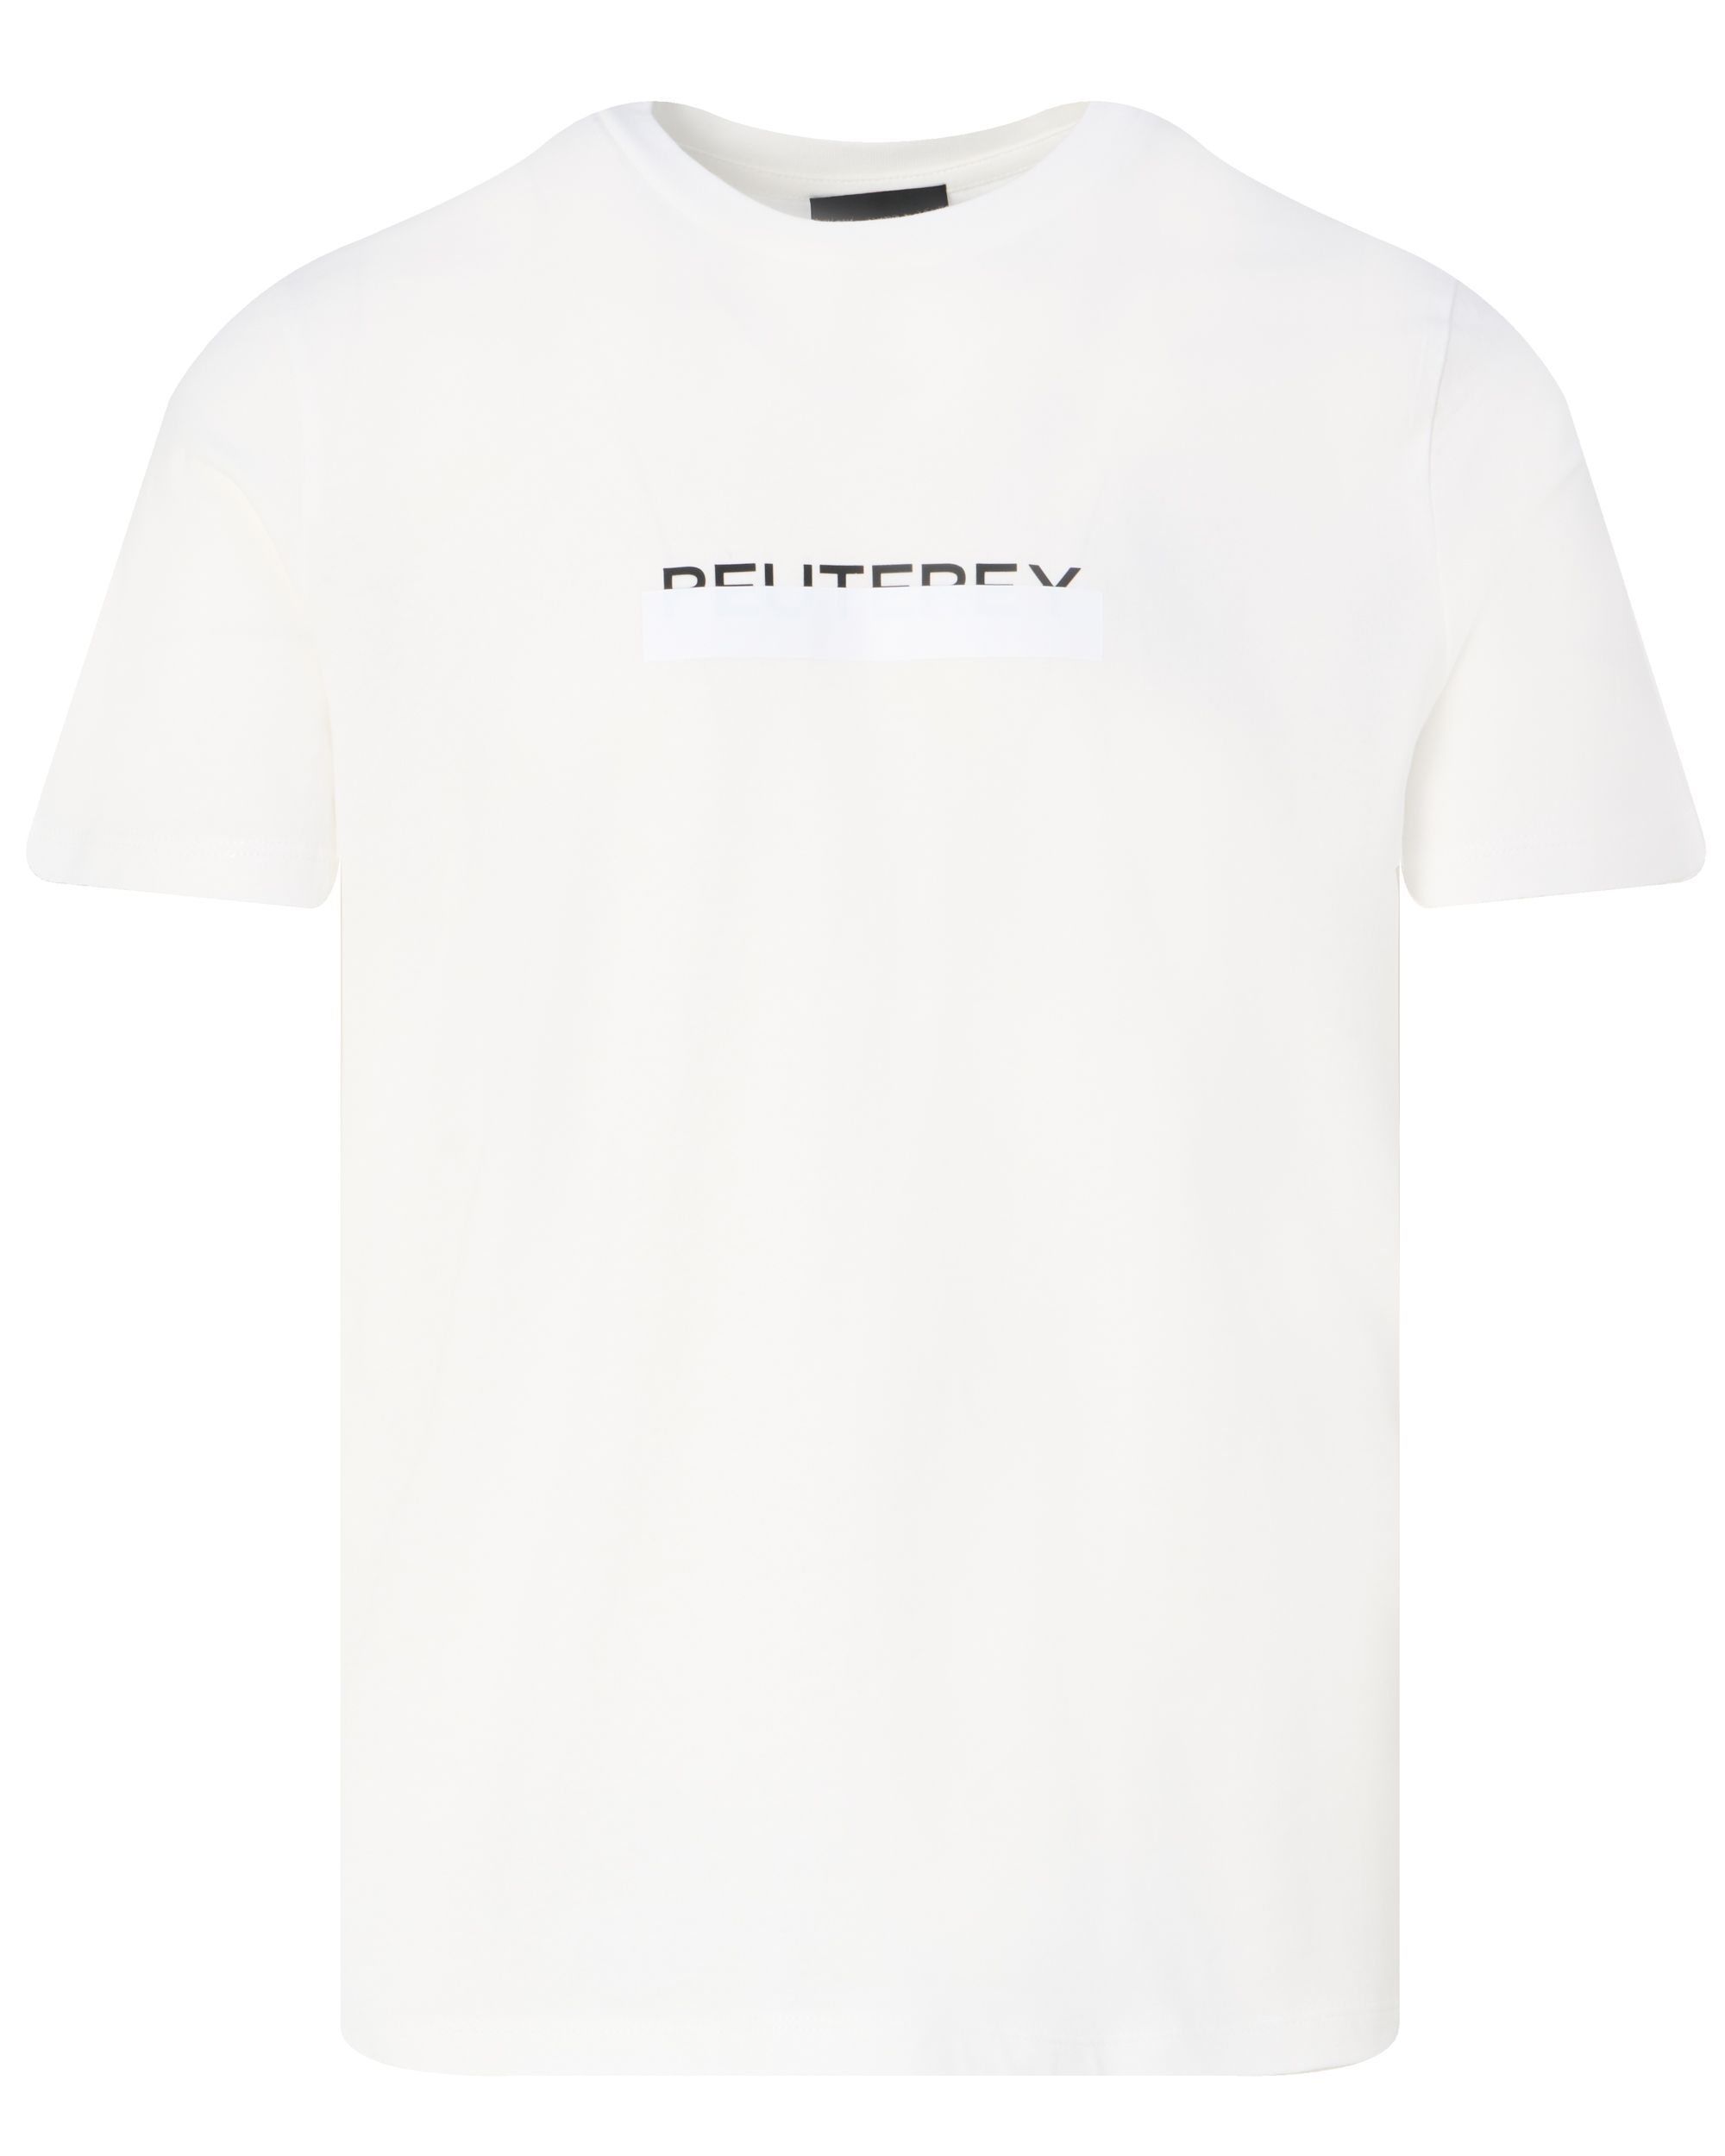 Peuterey Manderly T-shirt KM Wit 094276-001-L